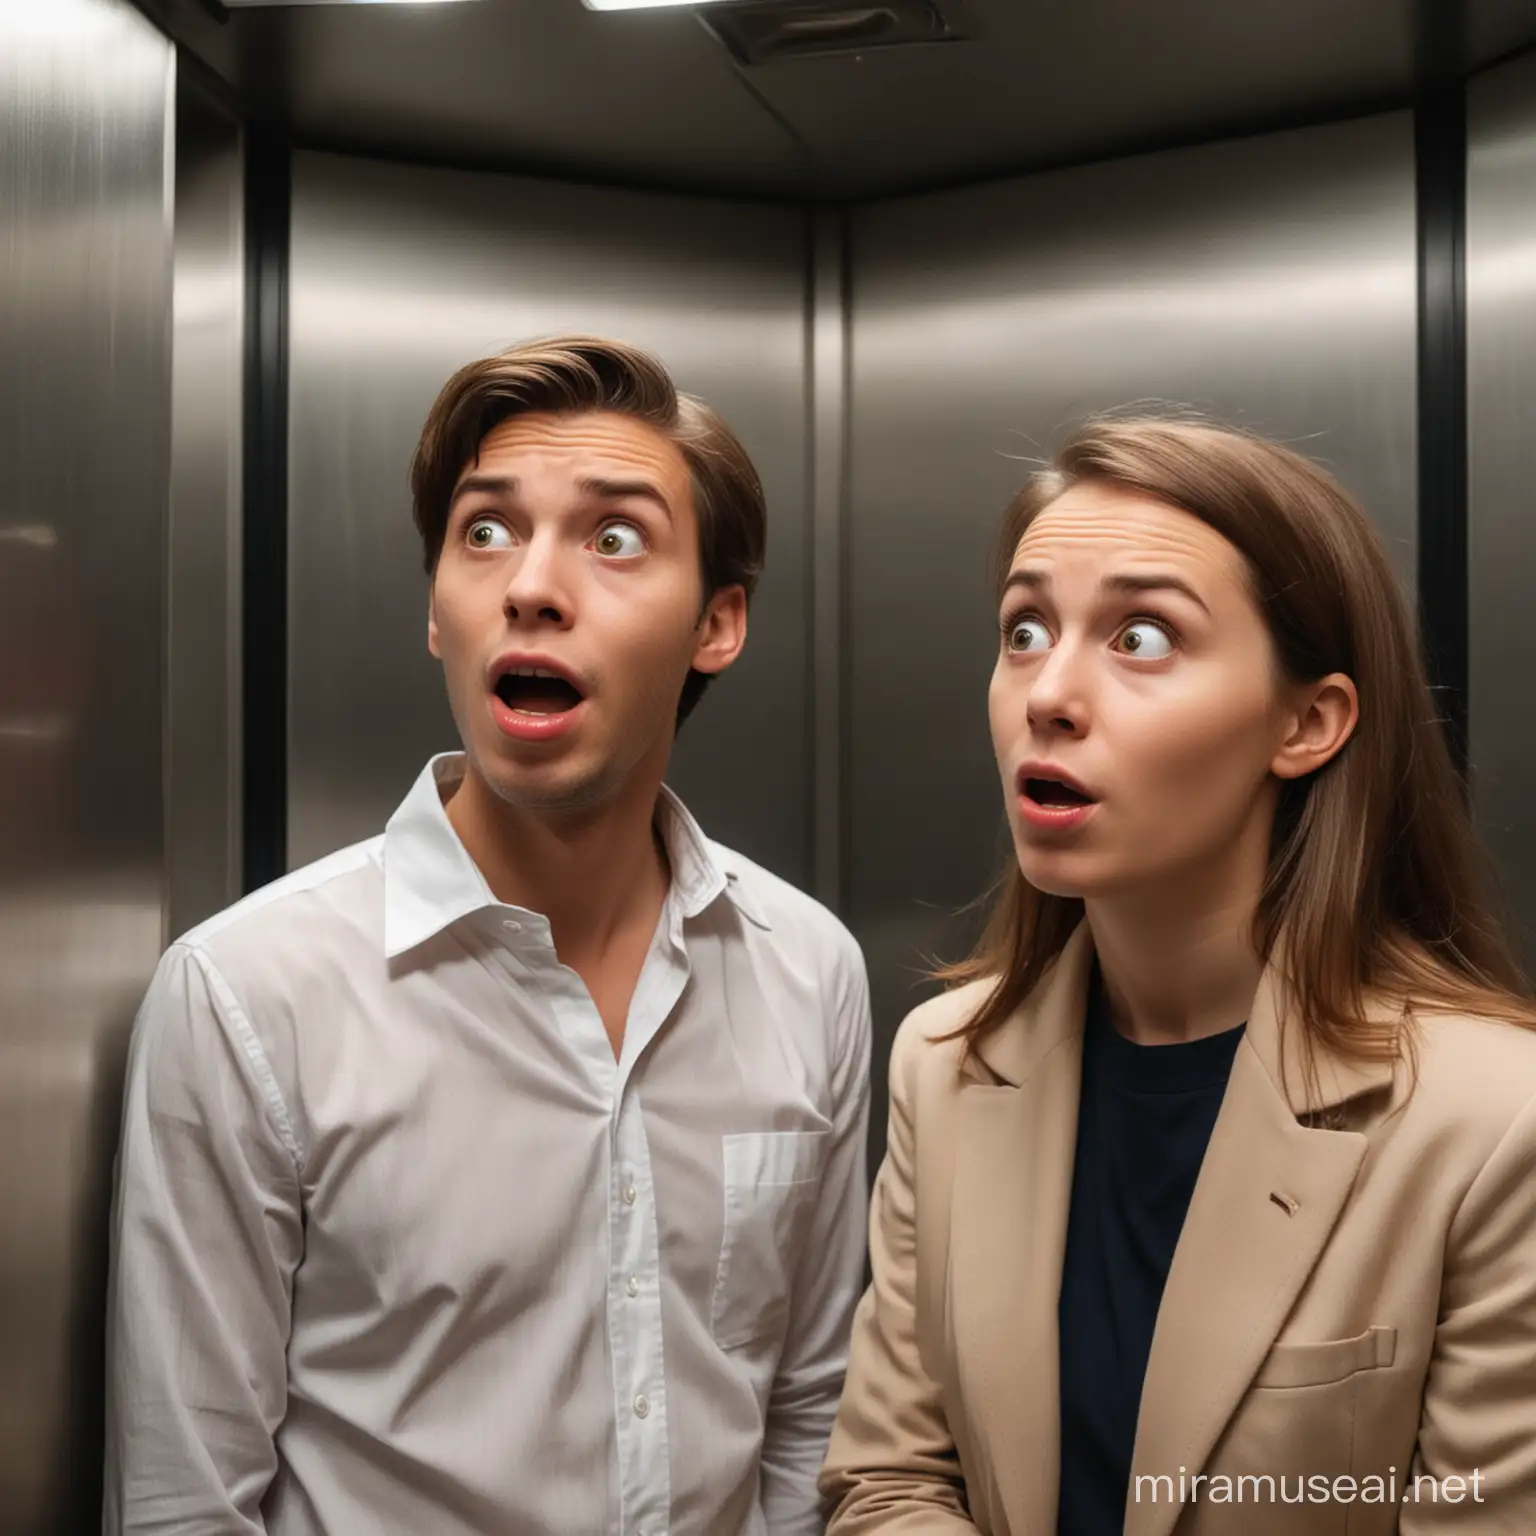 Surprised Colleagues Encounter in Elevator